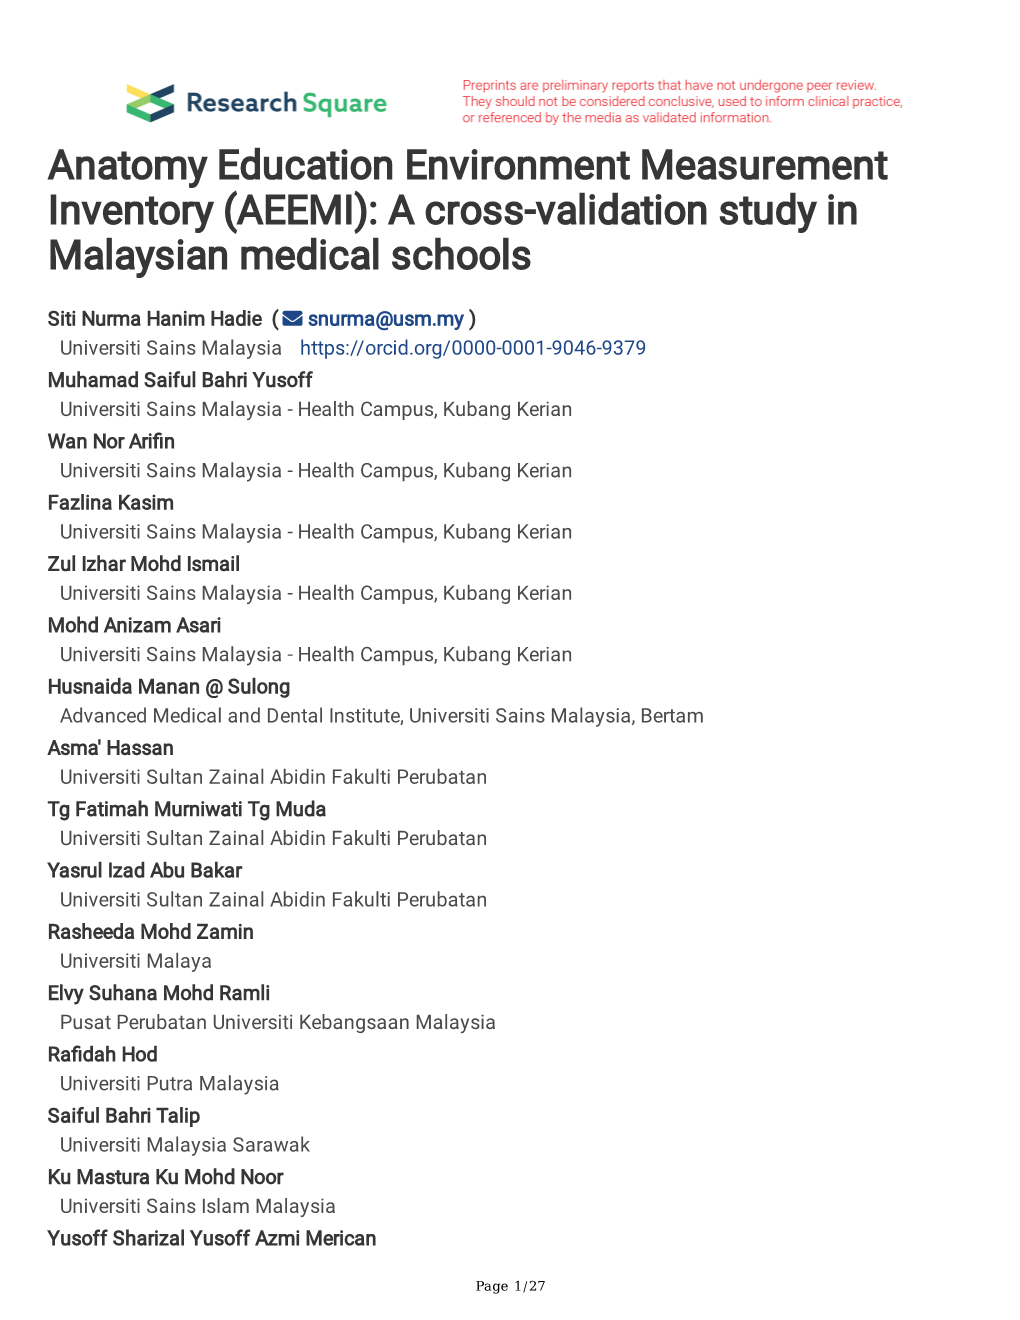 Anatomy Education Environment Measurement Inventory (AEEMI): a Cross-Validation Study in Malaysian Medical Schools